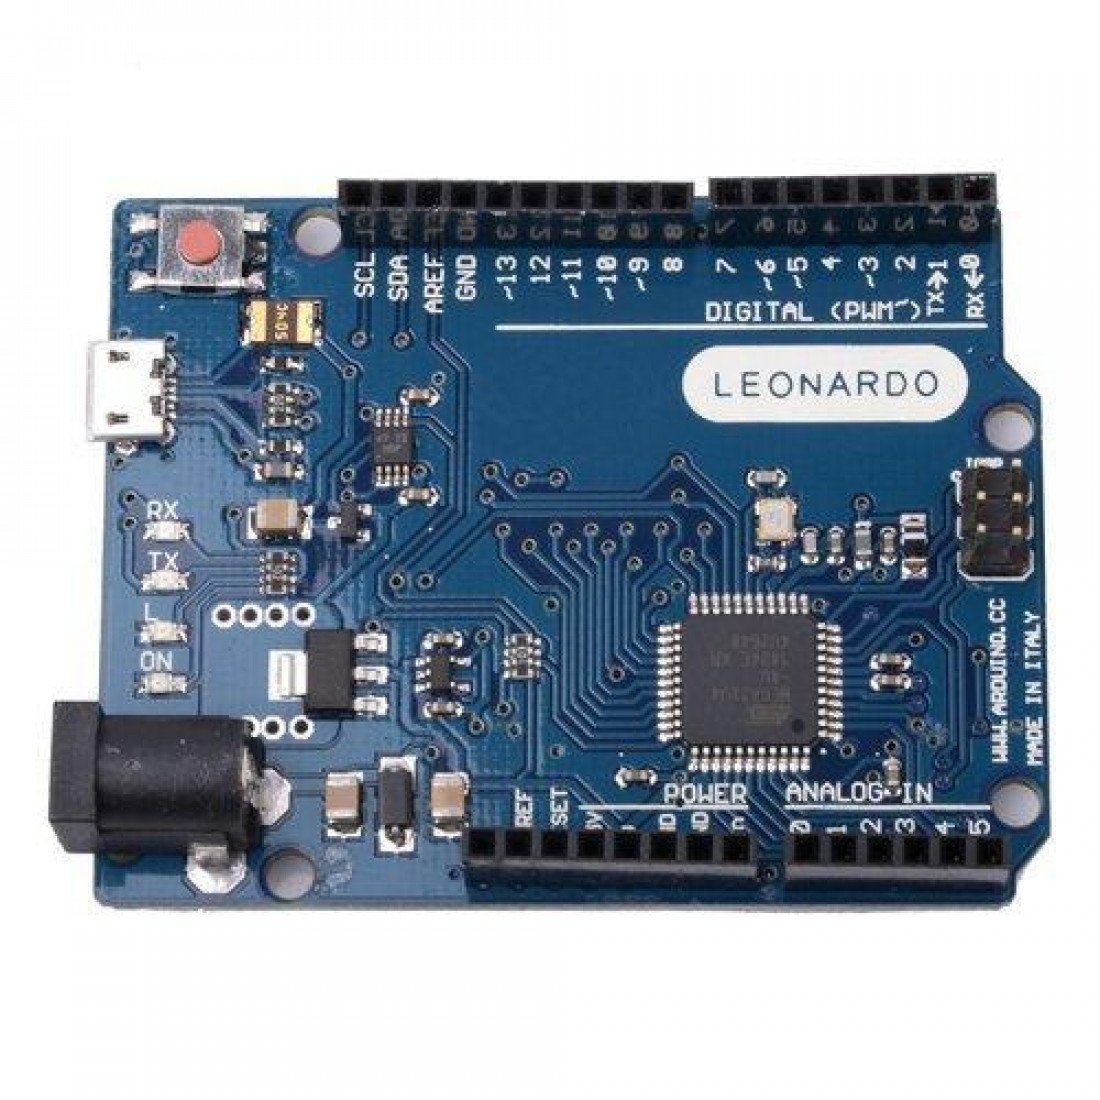 Прошивка микро. Pro Micro atmega32u4. Leonardo Pro Micro atmega32u4. Arduino Pro Micro atmega32u4 (Leonardo). Макетная плата ардуино Леонардо.